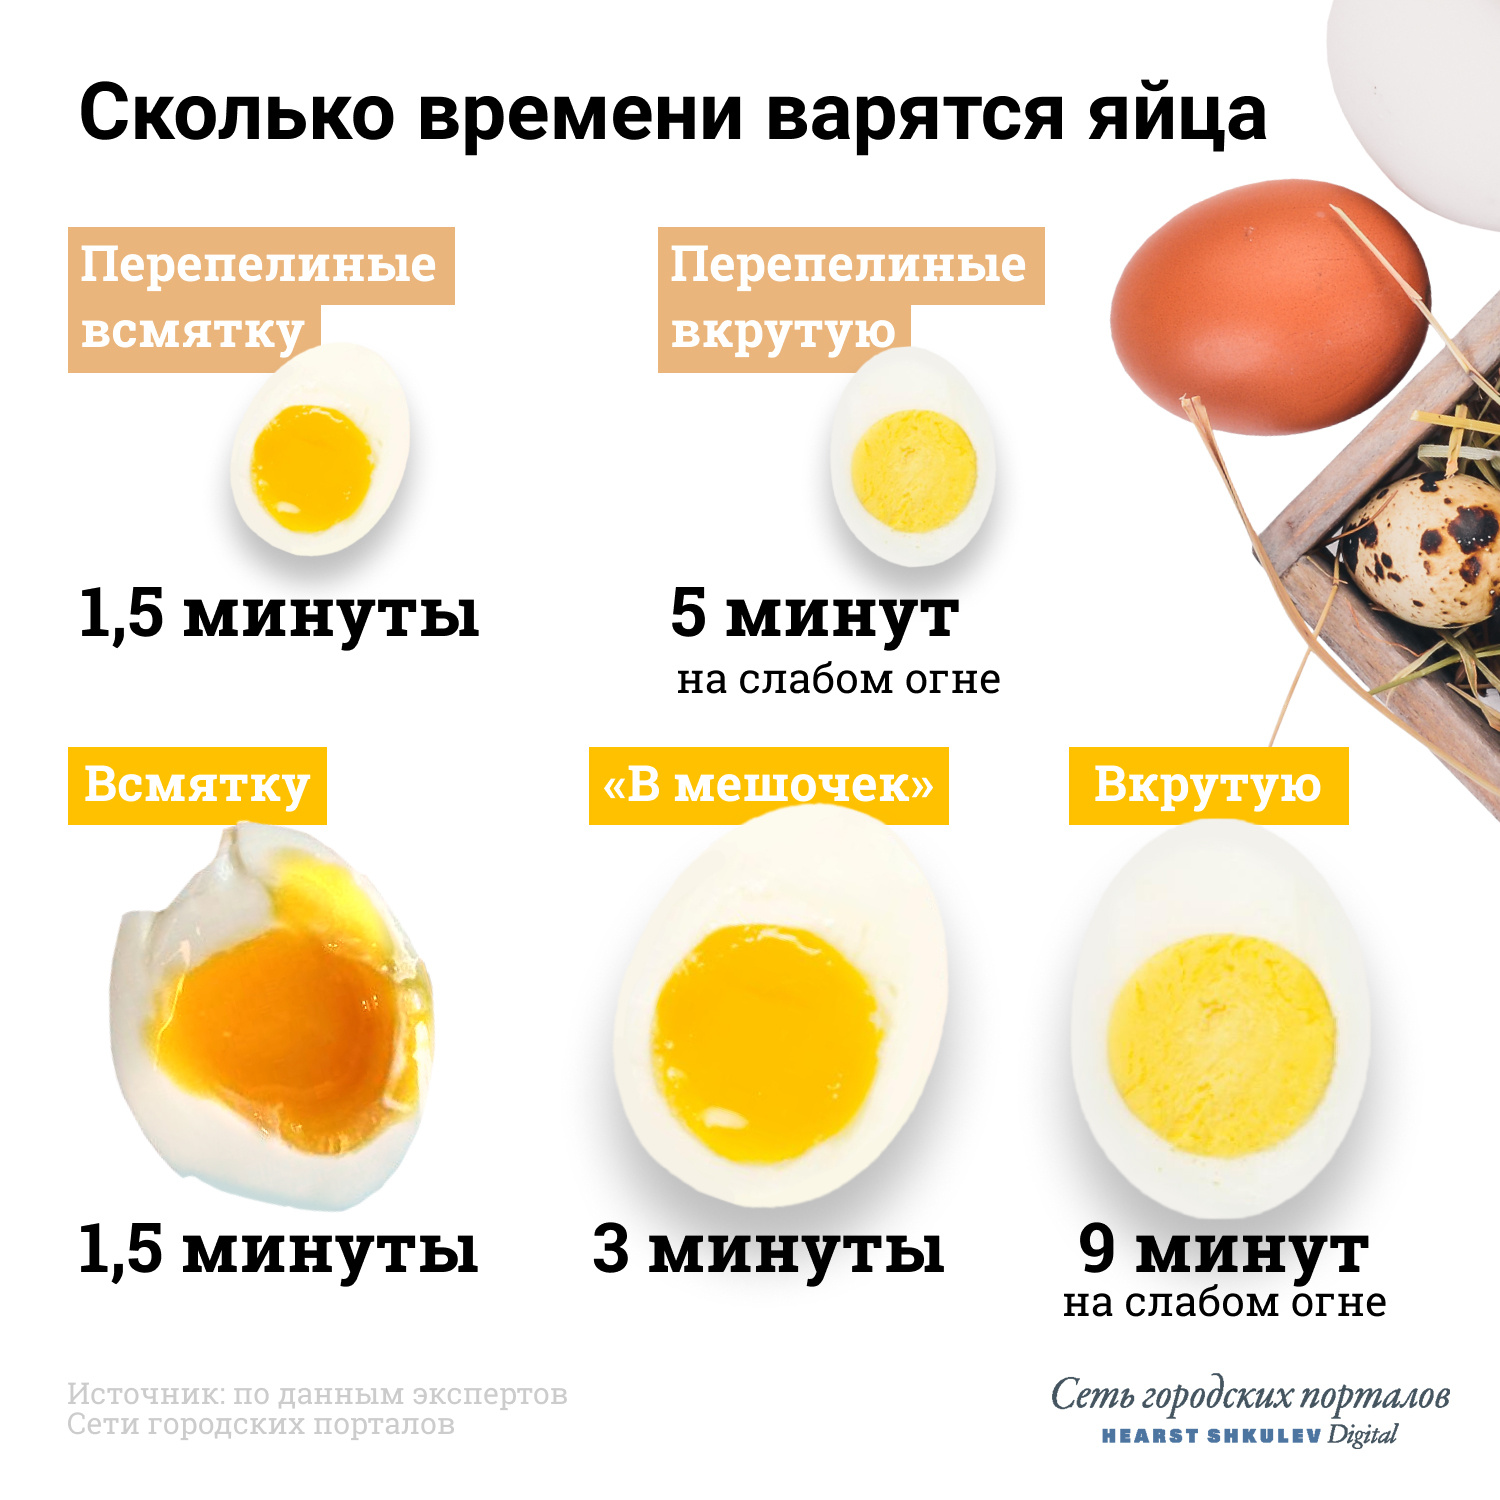 Максимум для варки яиц — 9 минут